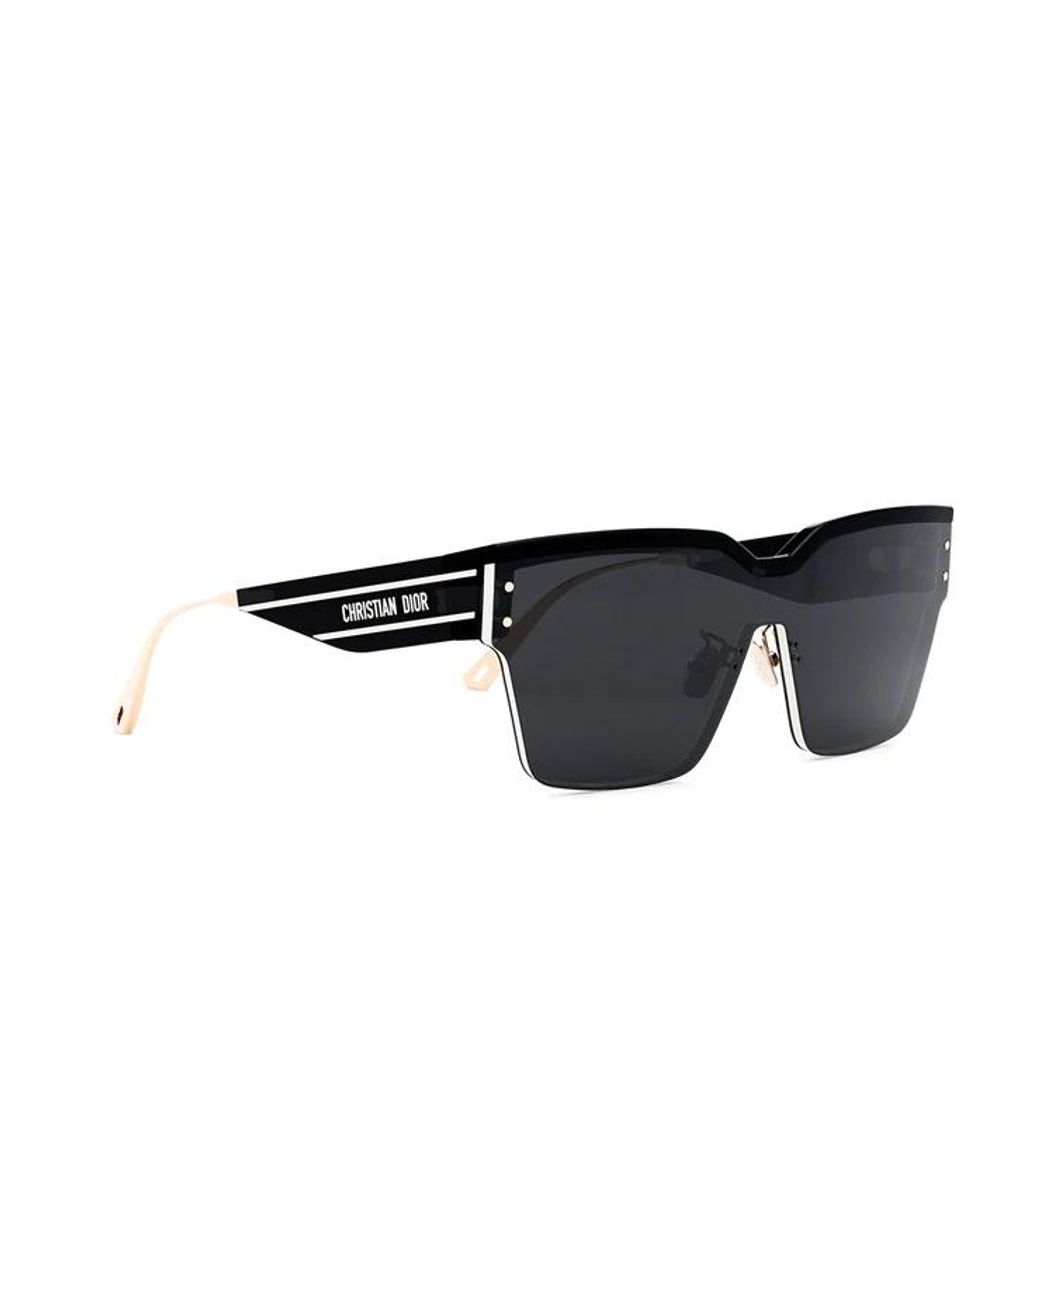 Dior Grey Shield Sunglasses Club M4u 45a0 00 in Black | Lyst